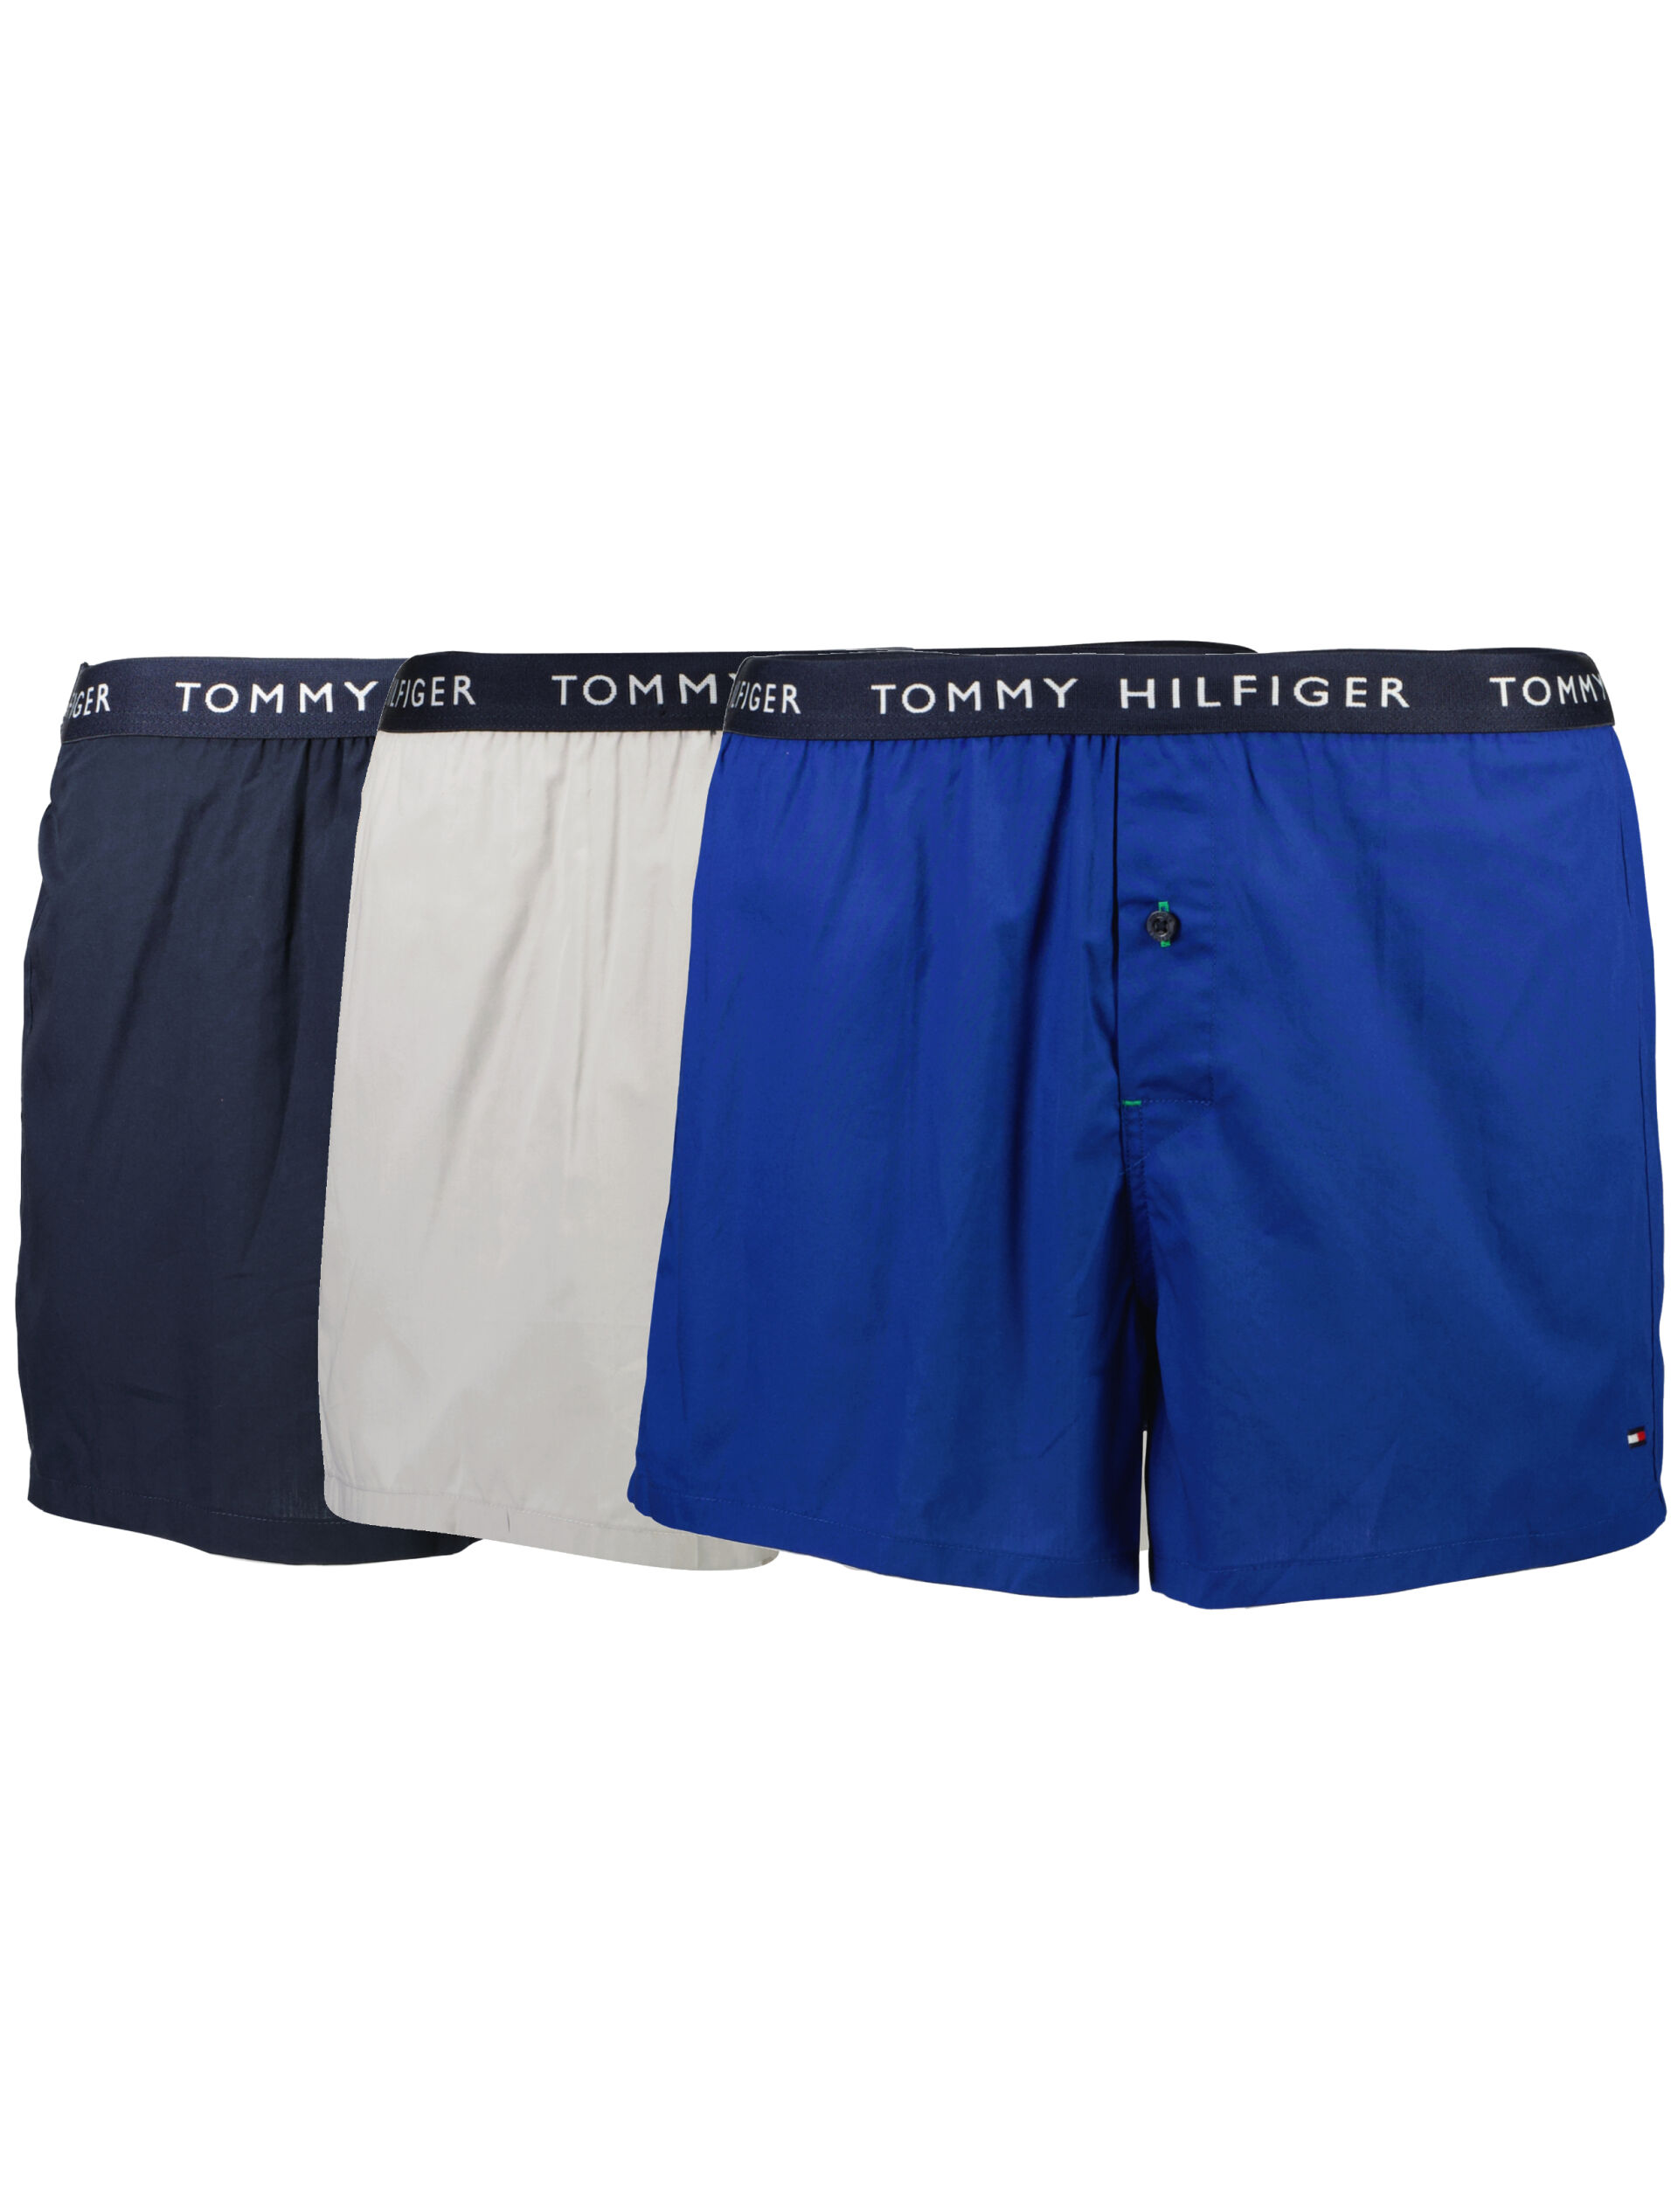 Tommy Hilfiger  Boxershorts 90-900840